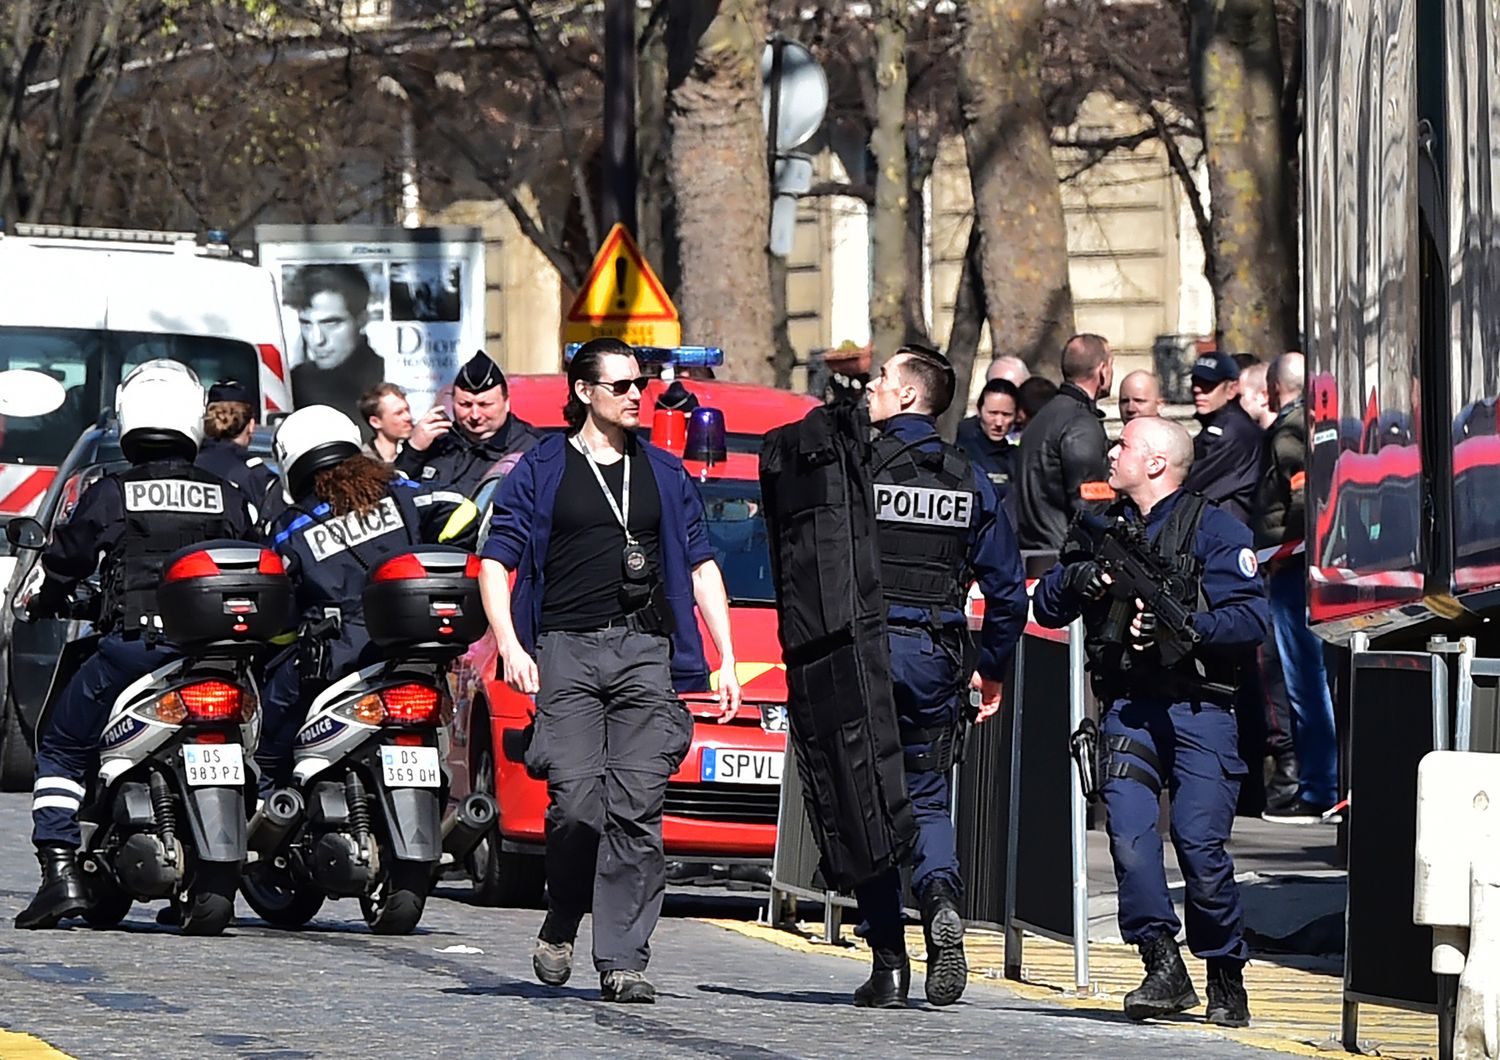 Esplosione nella sede del Fmi a Parigi (Afp)&nbsp;